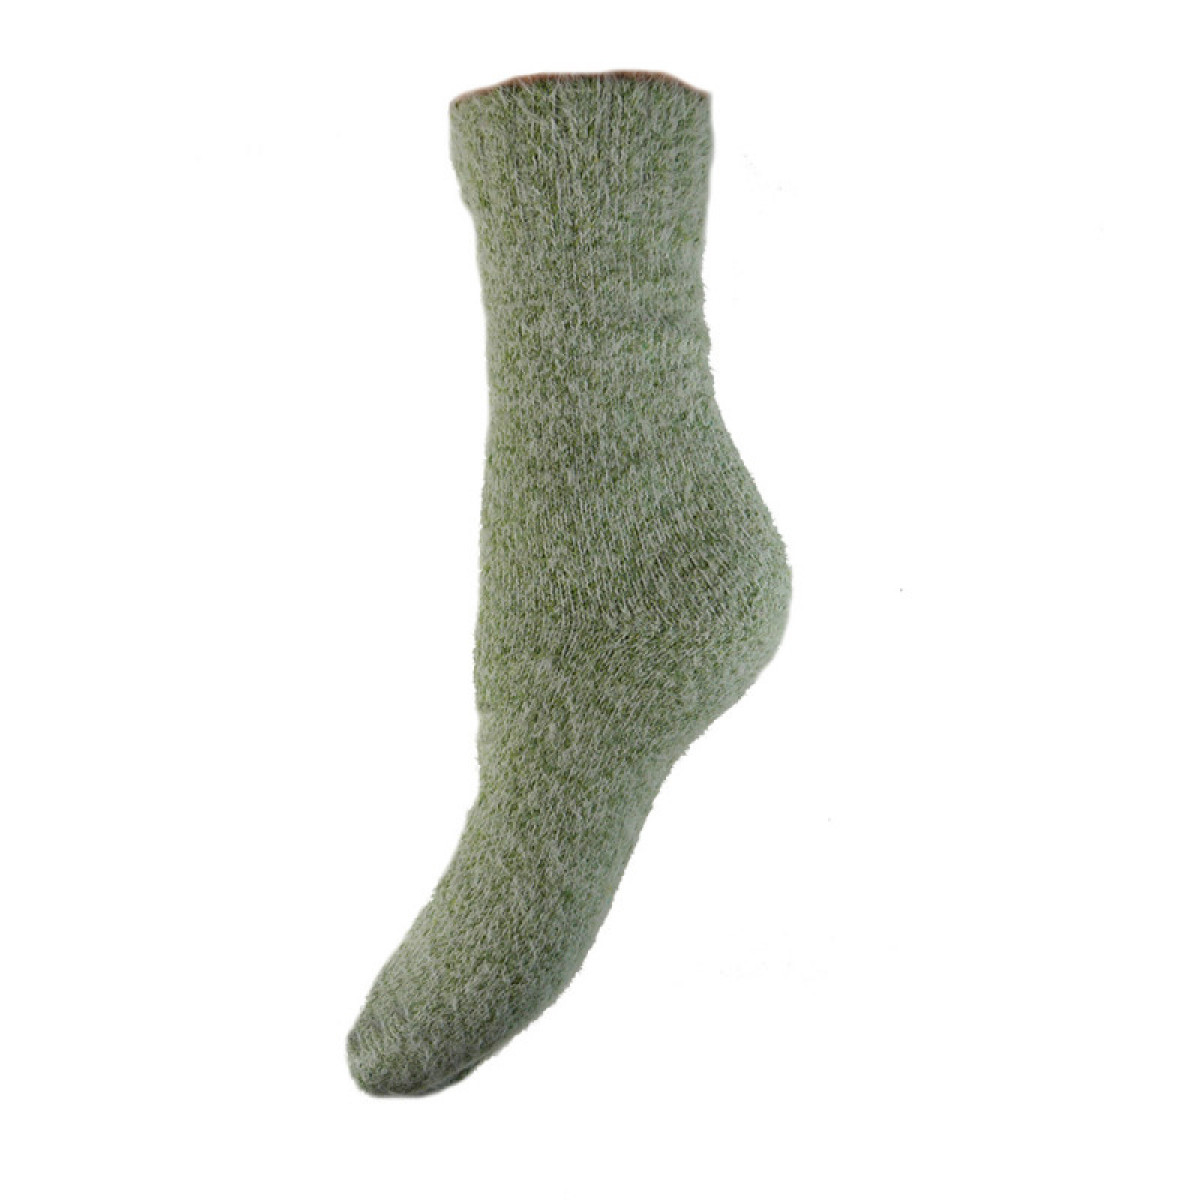 Super soft green wool blend socks ws386 size 4-7 » Joya